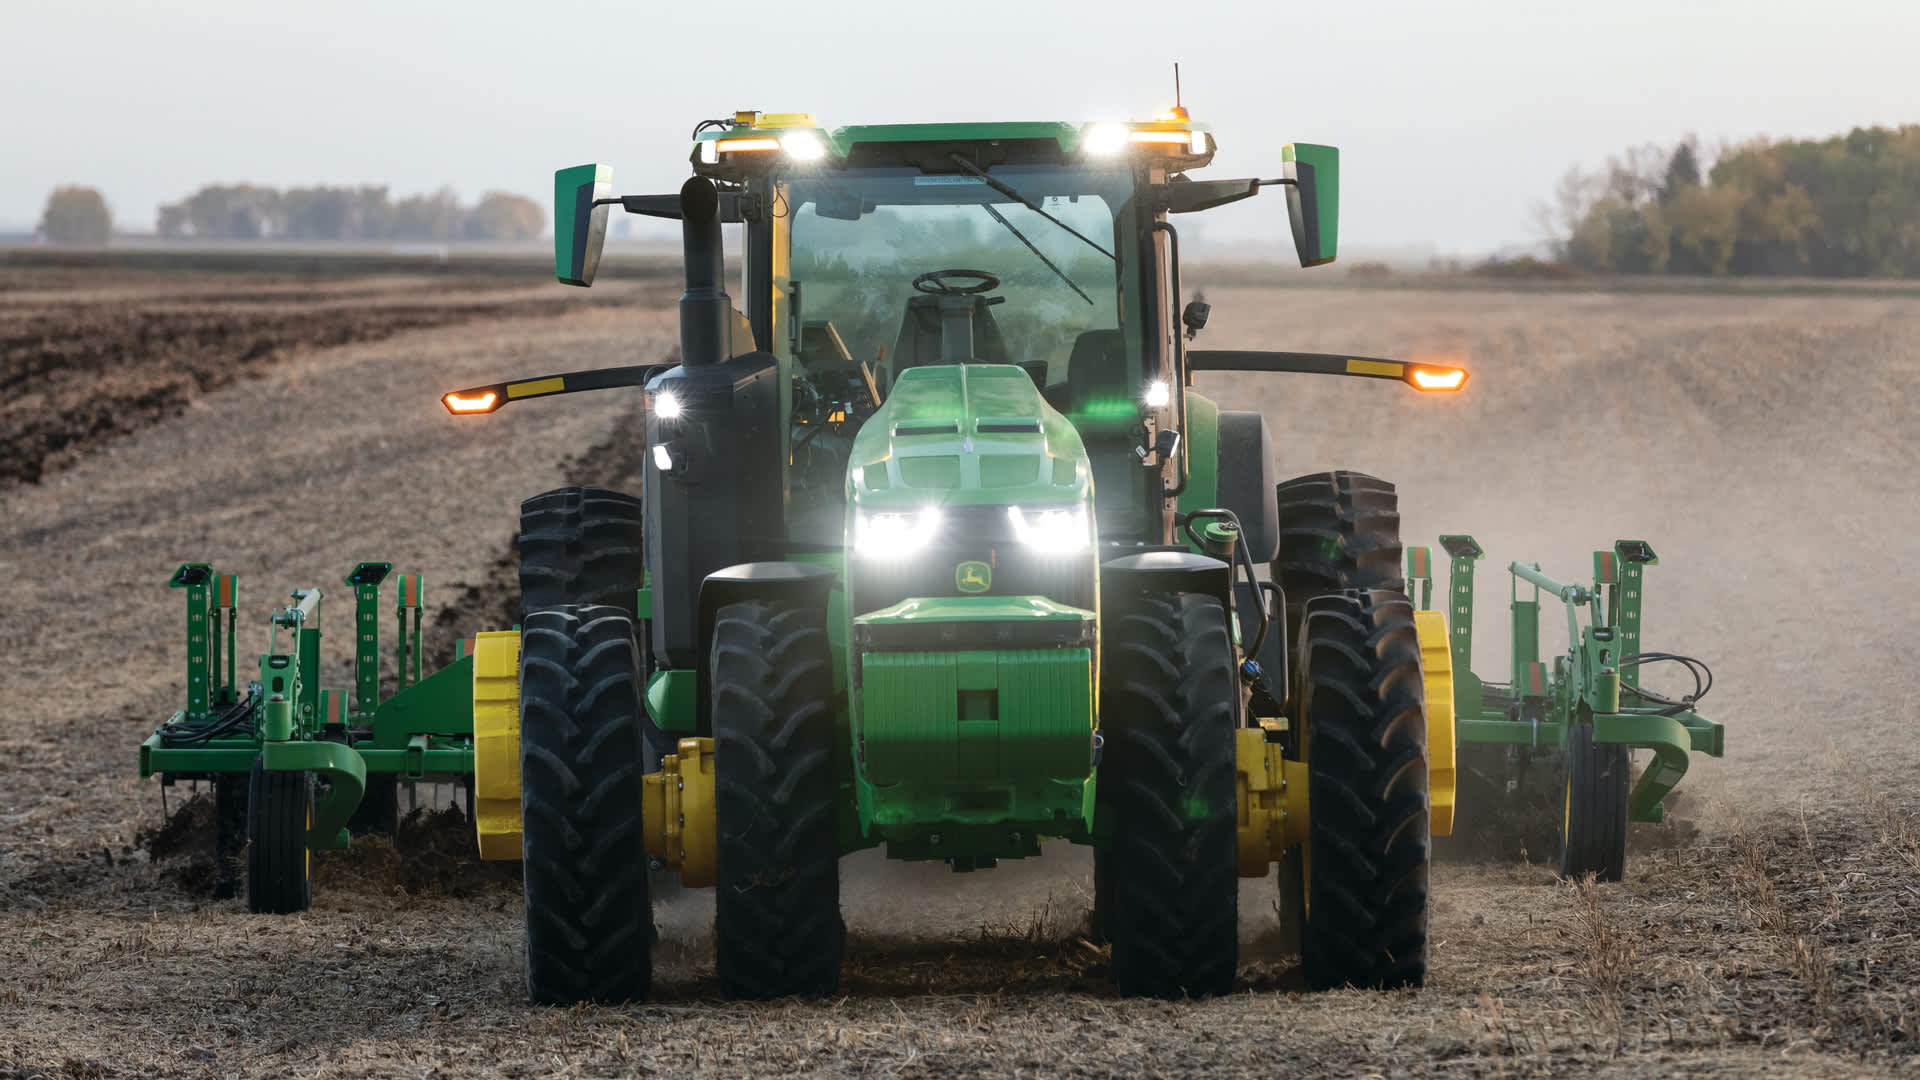 Deere's autonomous 8R tractor